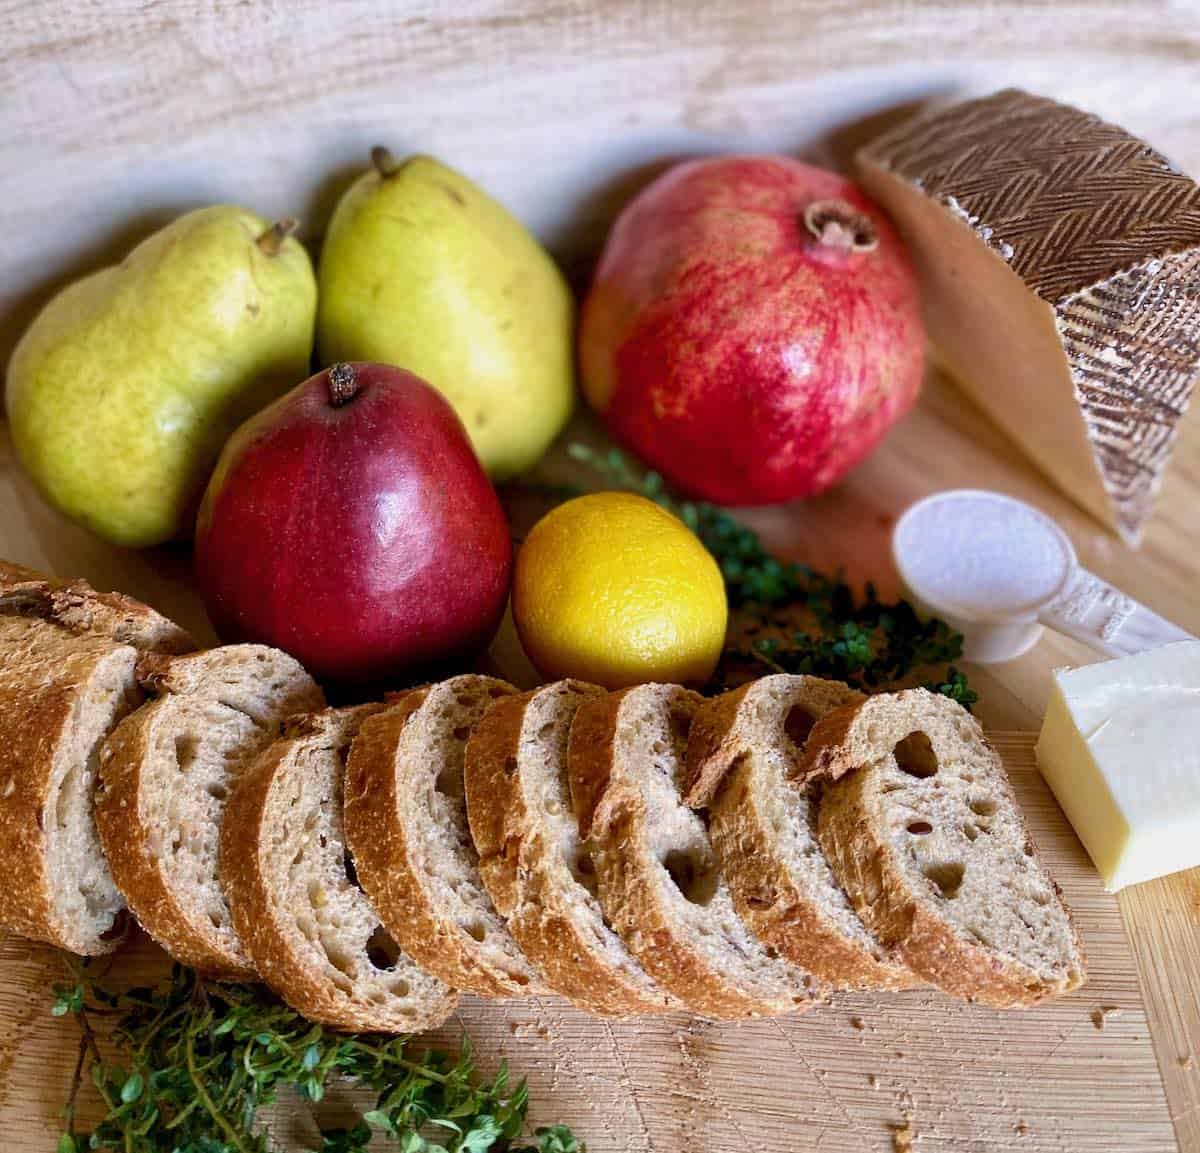 Pear crostini recipe ingredients: pears, bread, cheese, pomegranate, thyme, sugar, lemon.